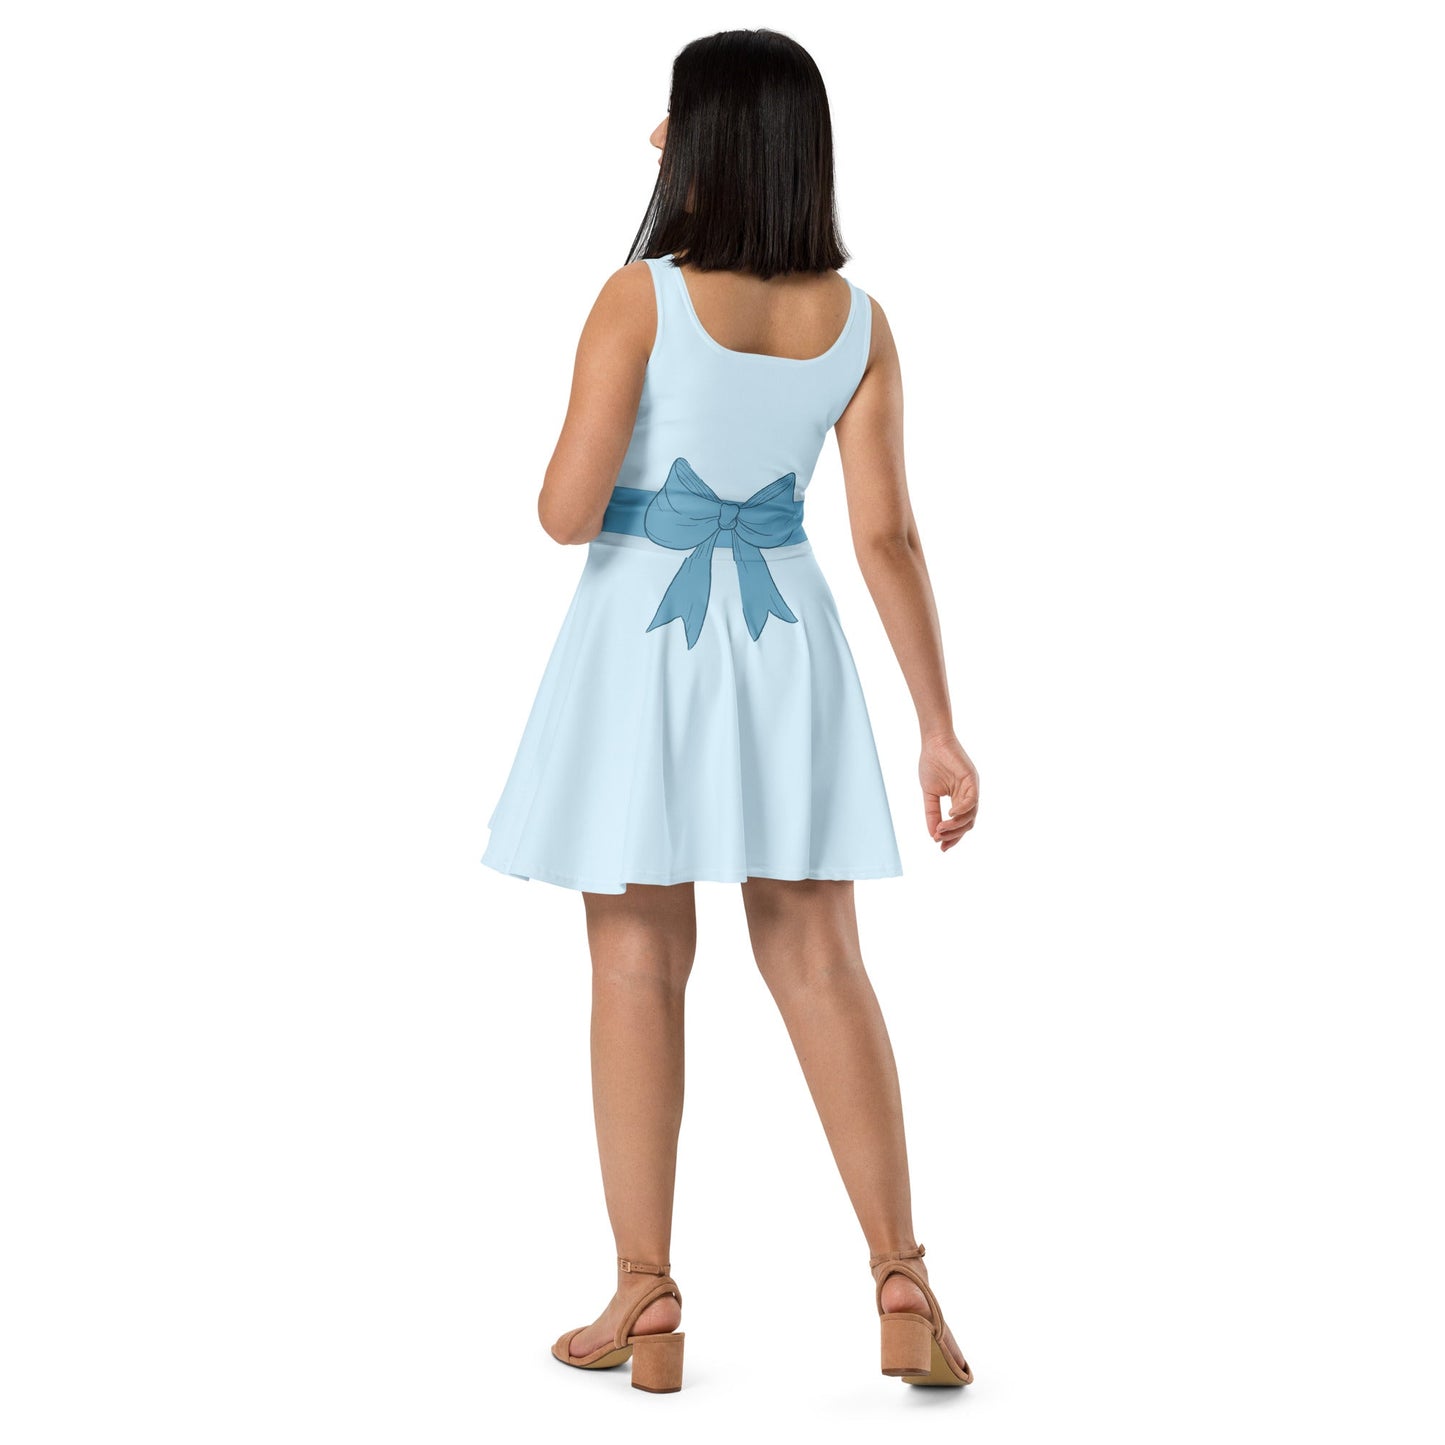 The Wendy Darling Skater Dress adult wendy dressAll Over PrintSkater DressWrong Lever Clothing